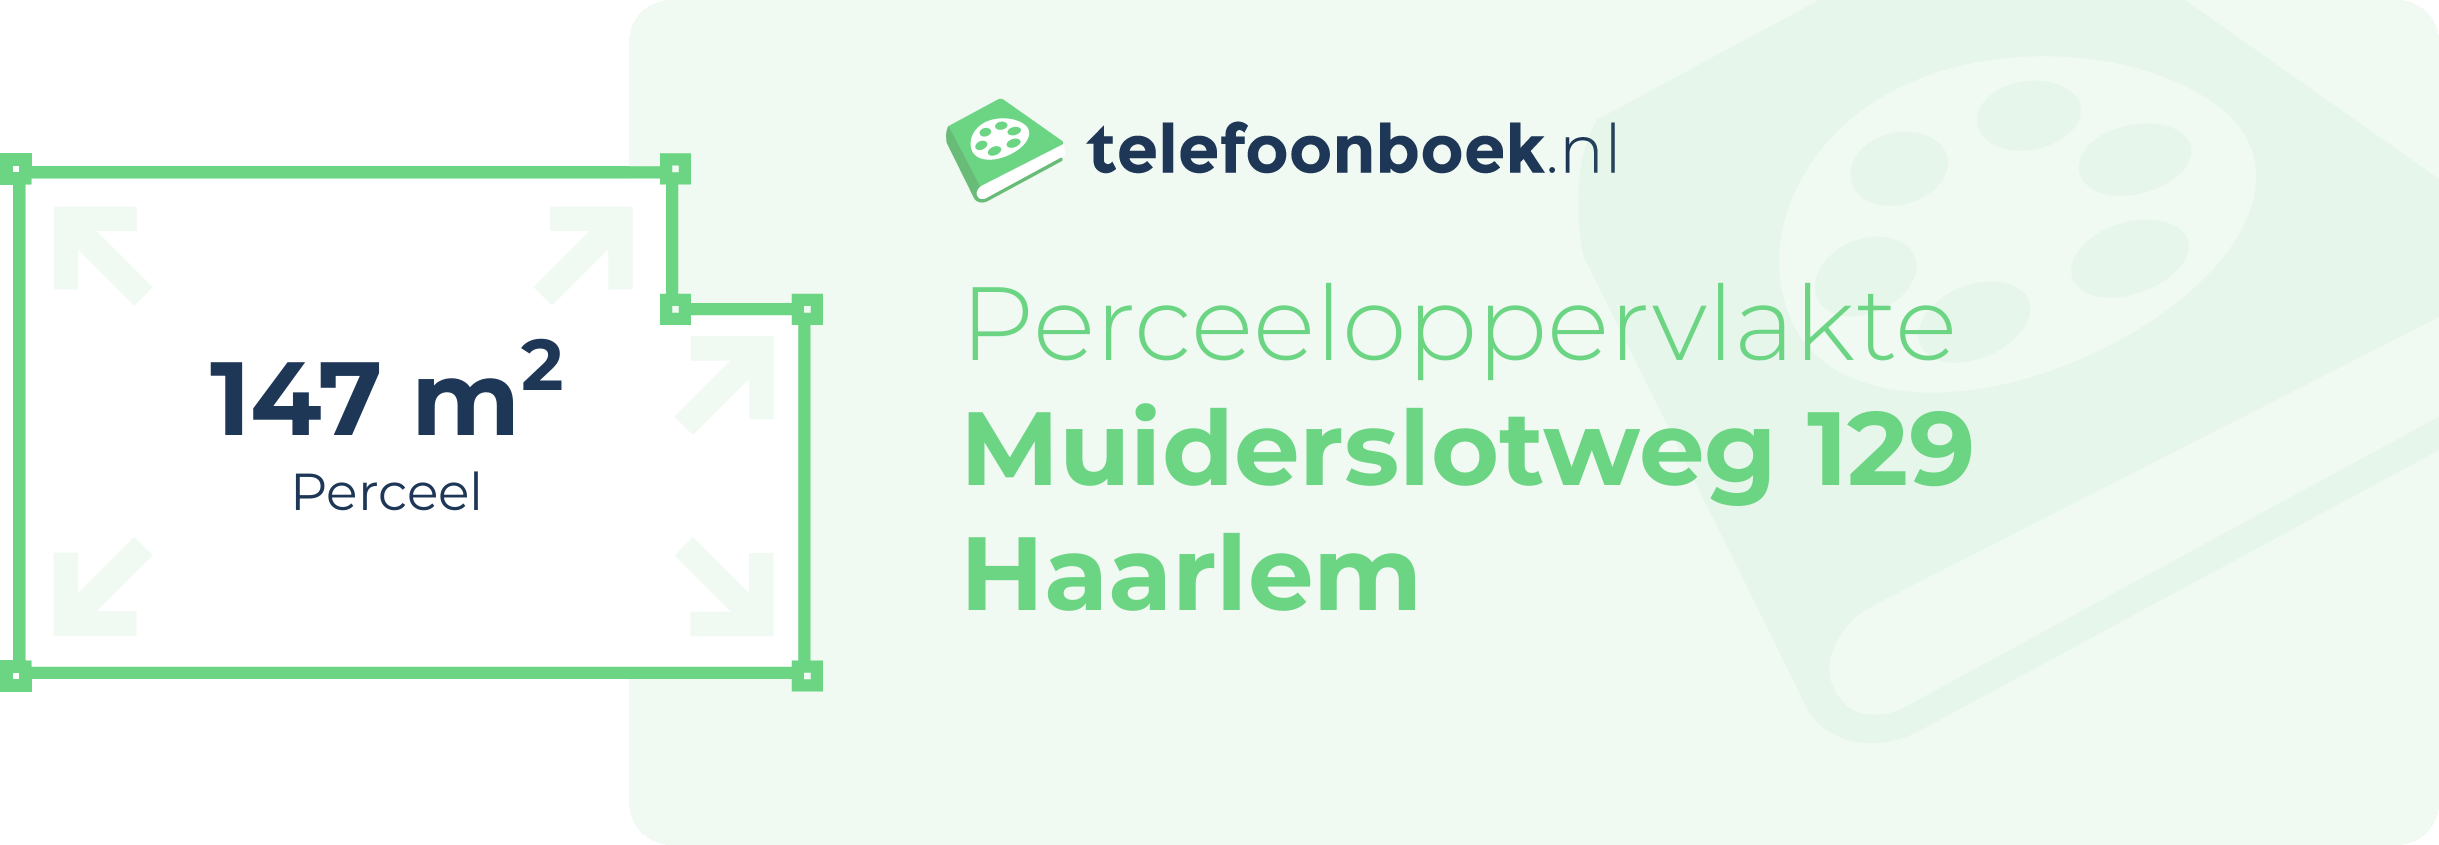 Perceeloppervlakte Muiderslotweg 129 Haarlem